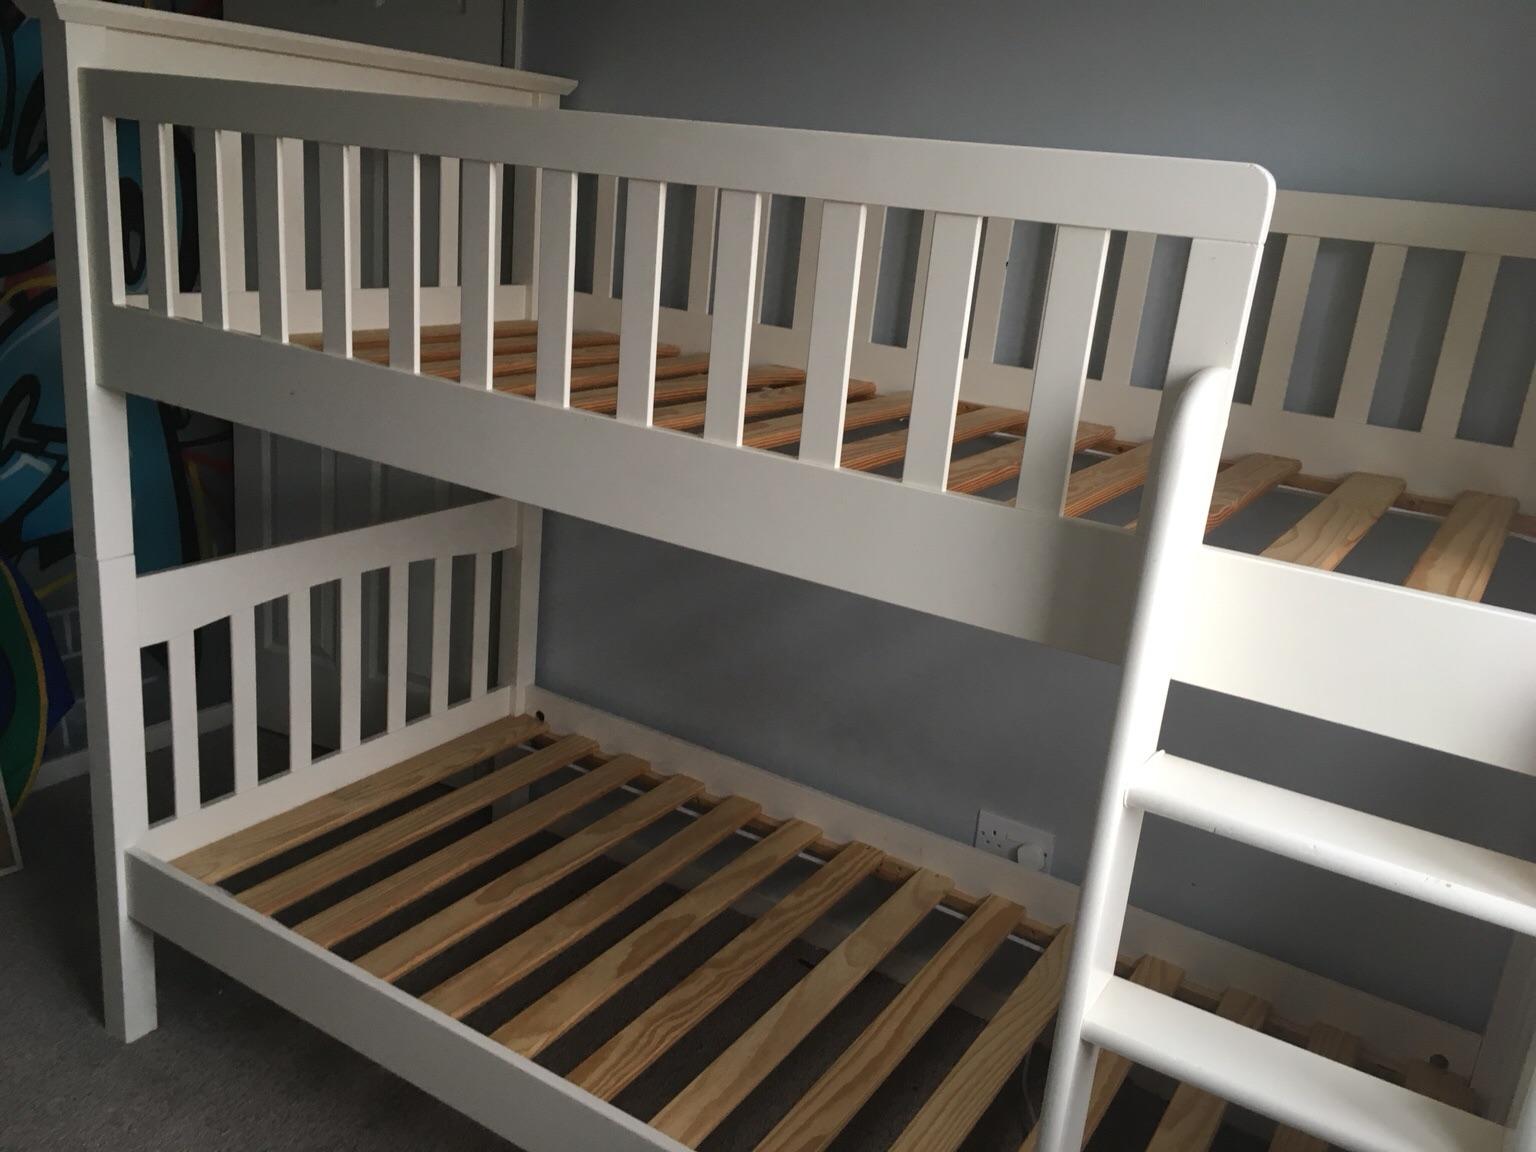 m&s bunk beds